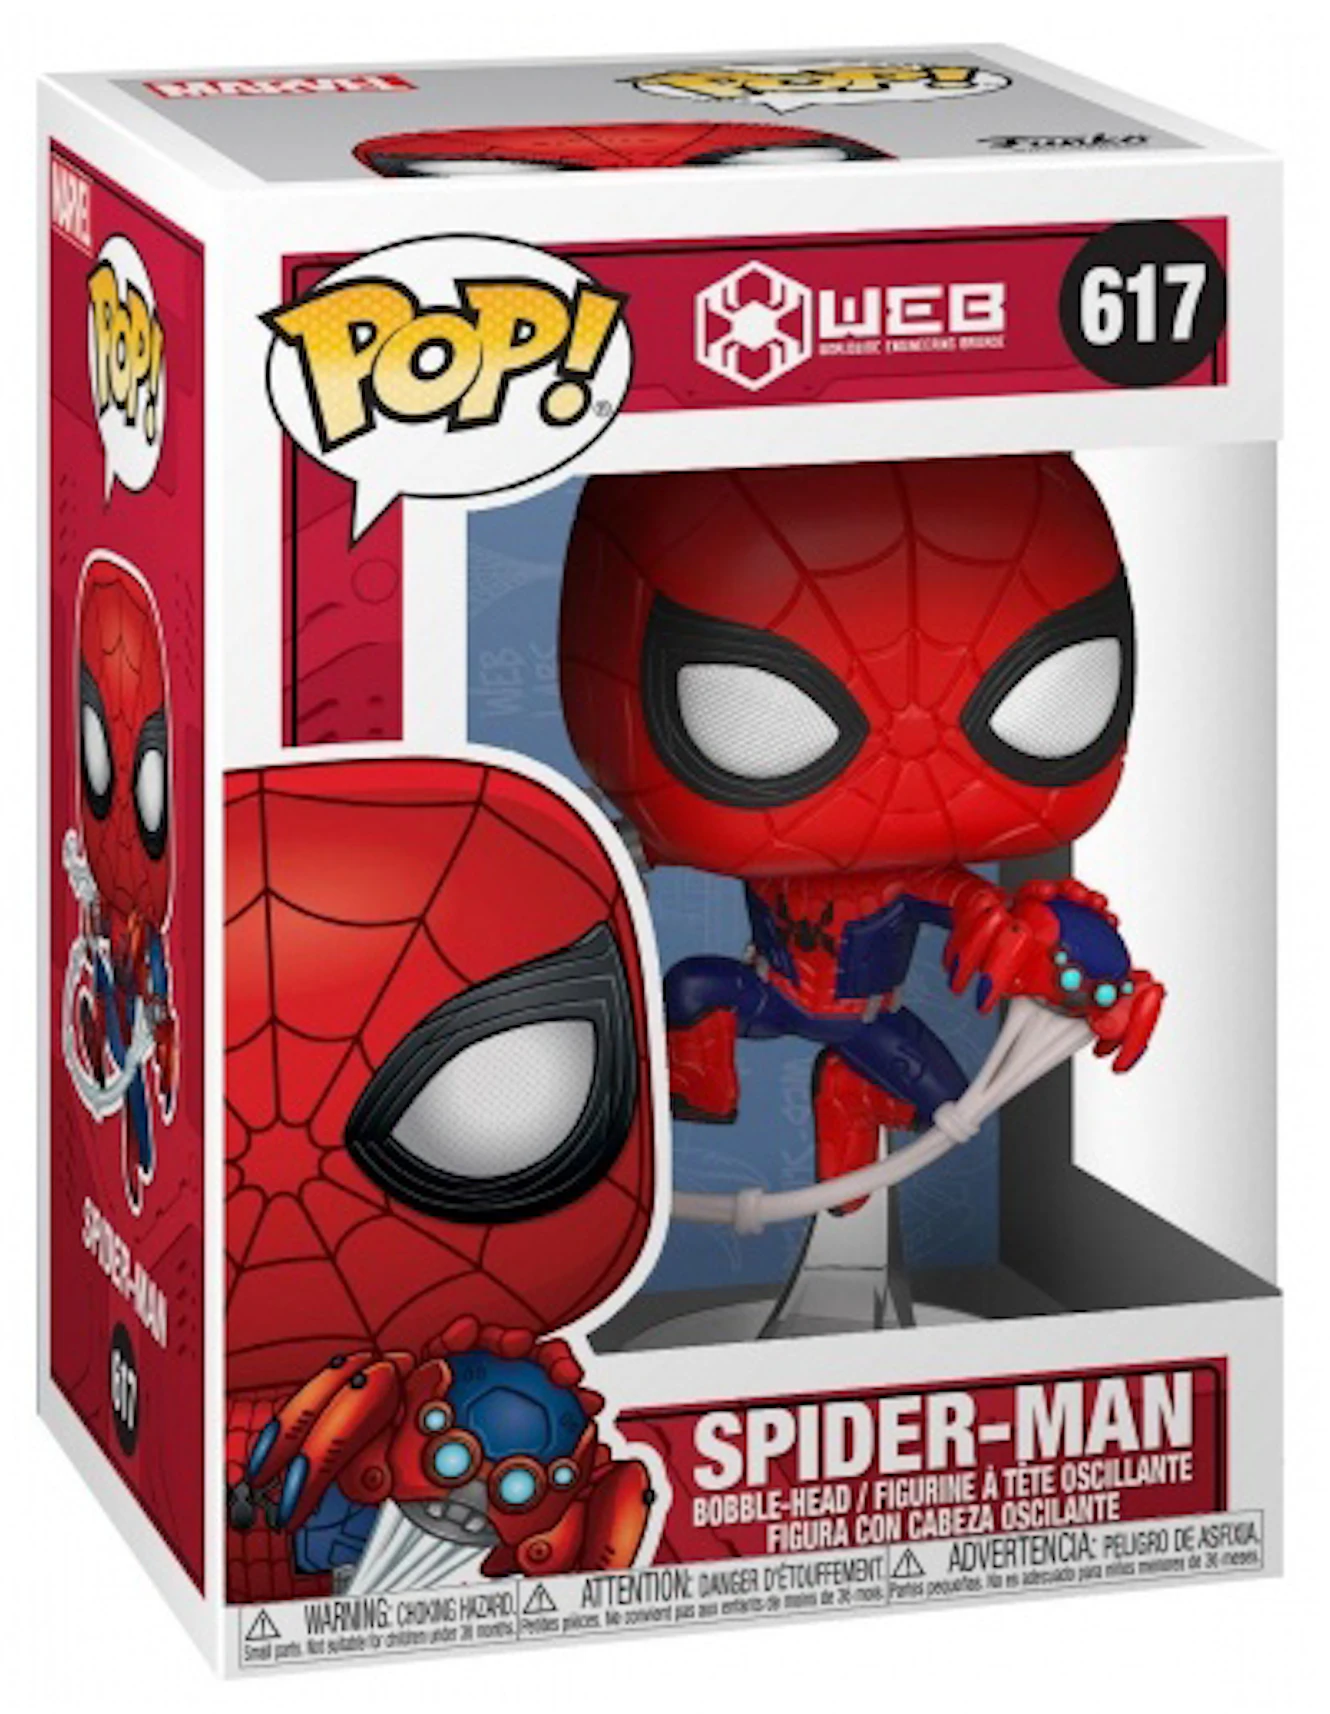 Funko Pop! WEB Spider-Man Disney Exclusive Bobble-Head Figure #617 - US